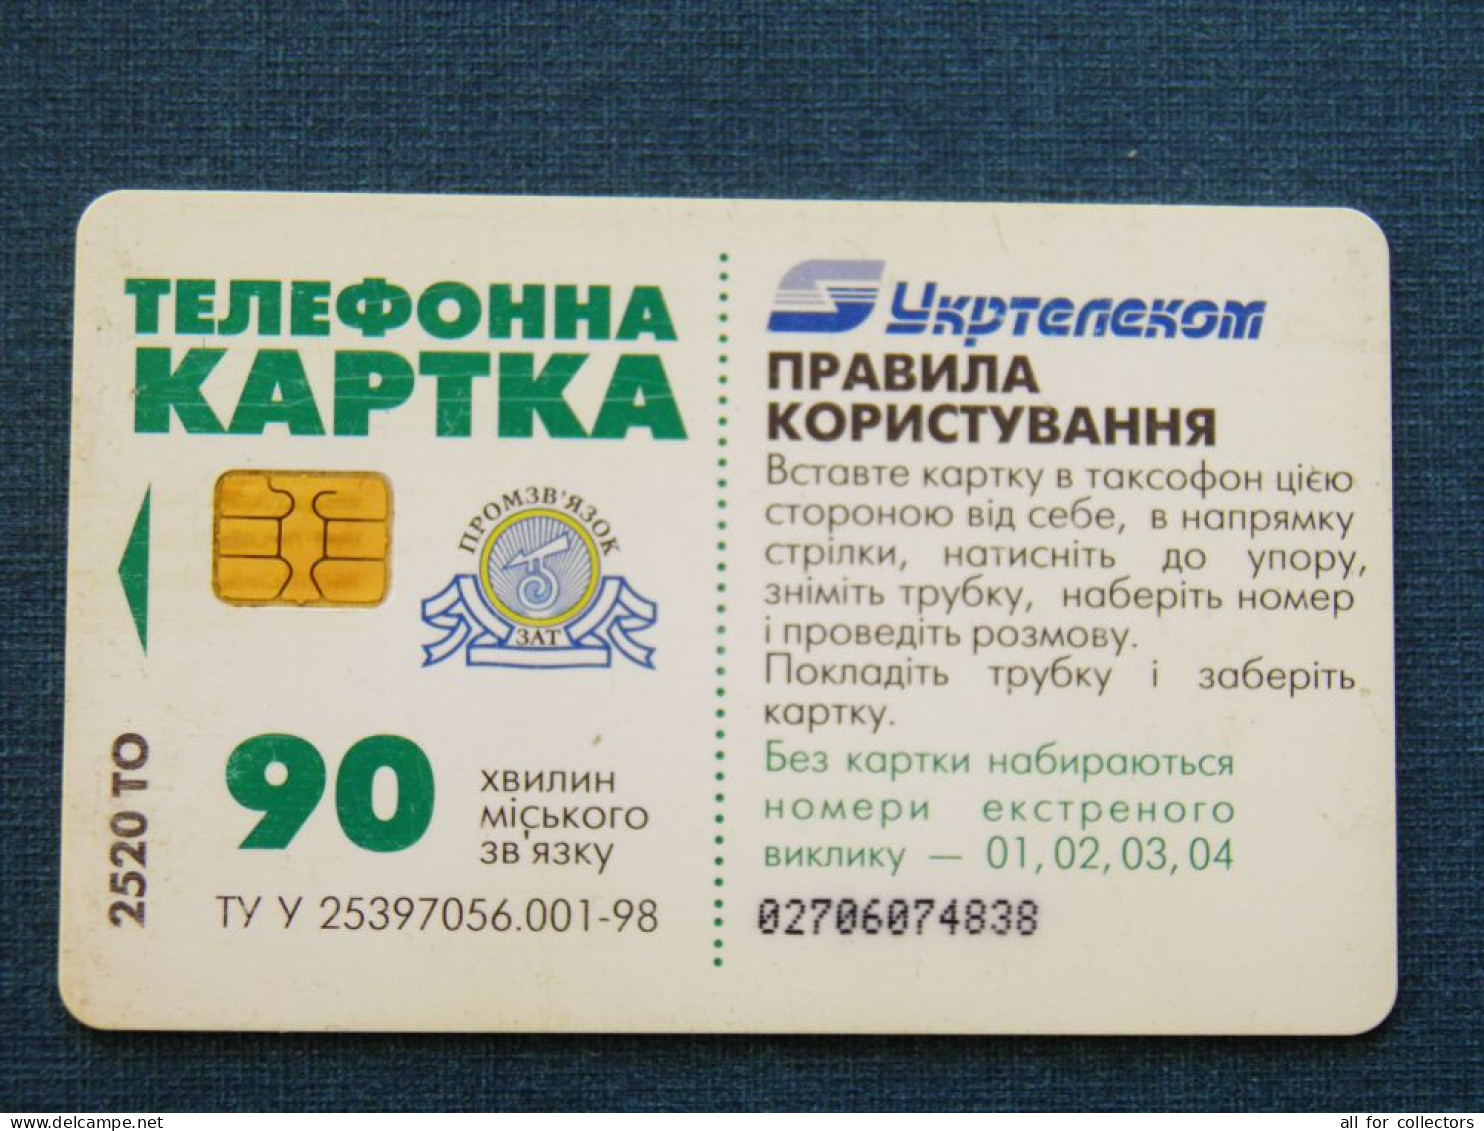 Phonecard Chip Advertising Internet Service Provider Ukrtelecom Relcom Angel Child Map 2520 Units 90 Calls UKRAINE - Ucrania